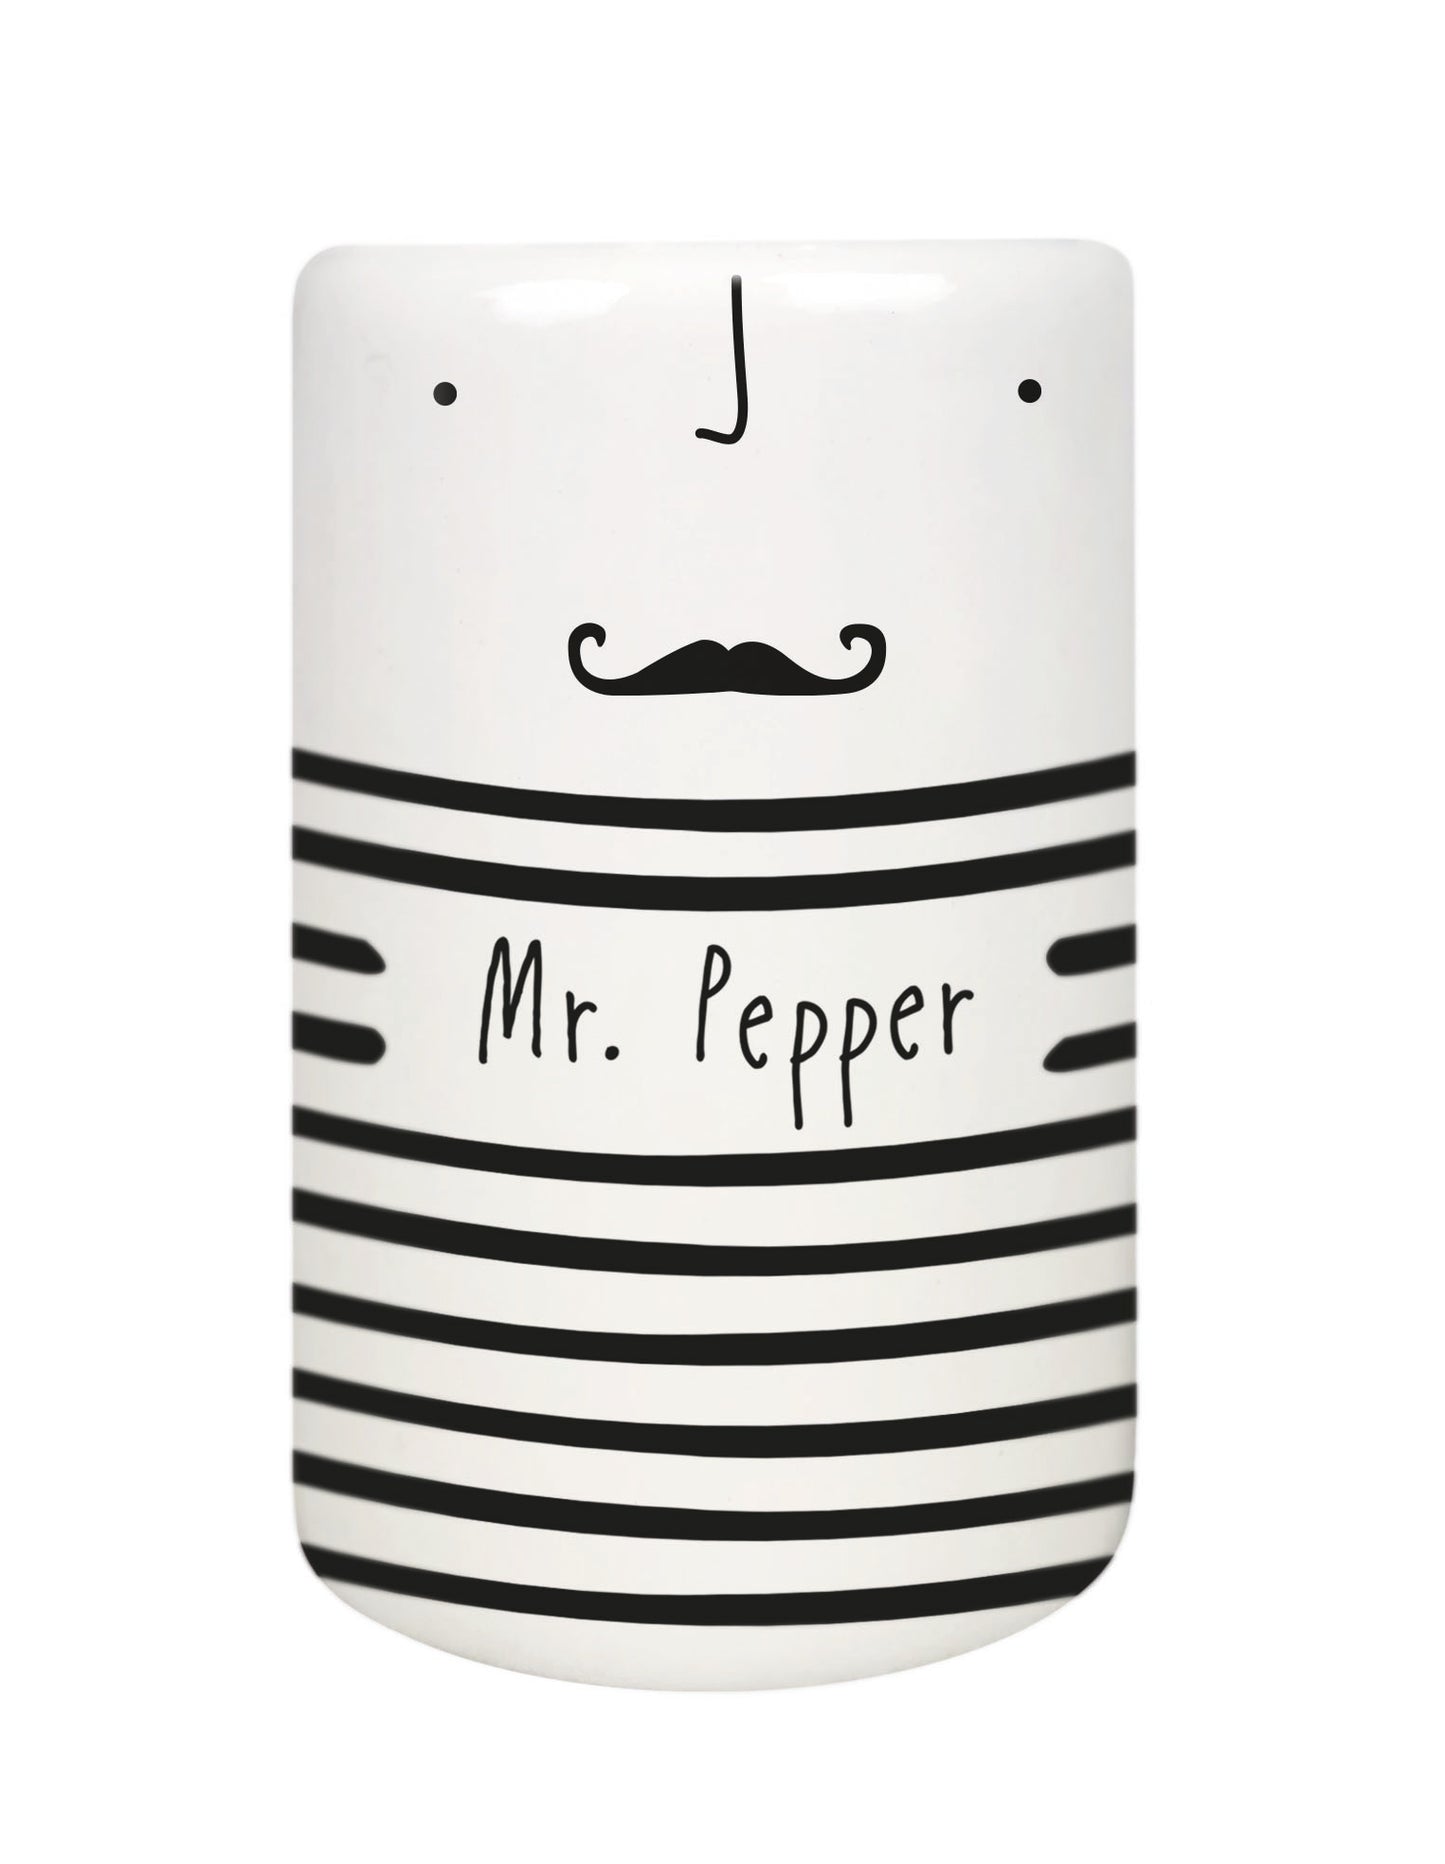 Salz & Pfefferstreuer Mrs. Salt & Mr. Pepper